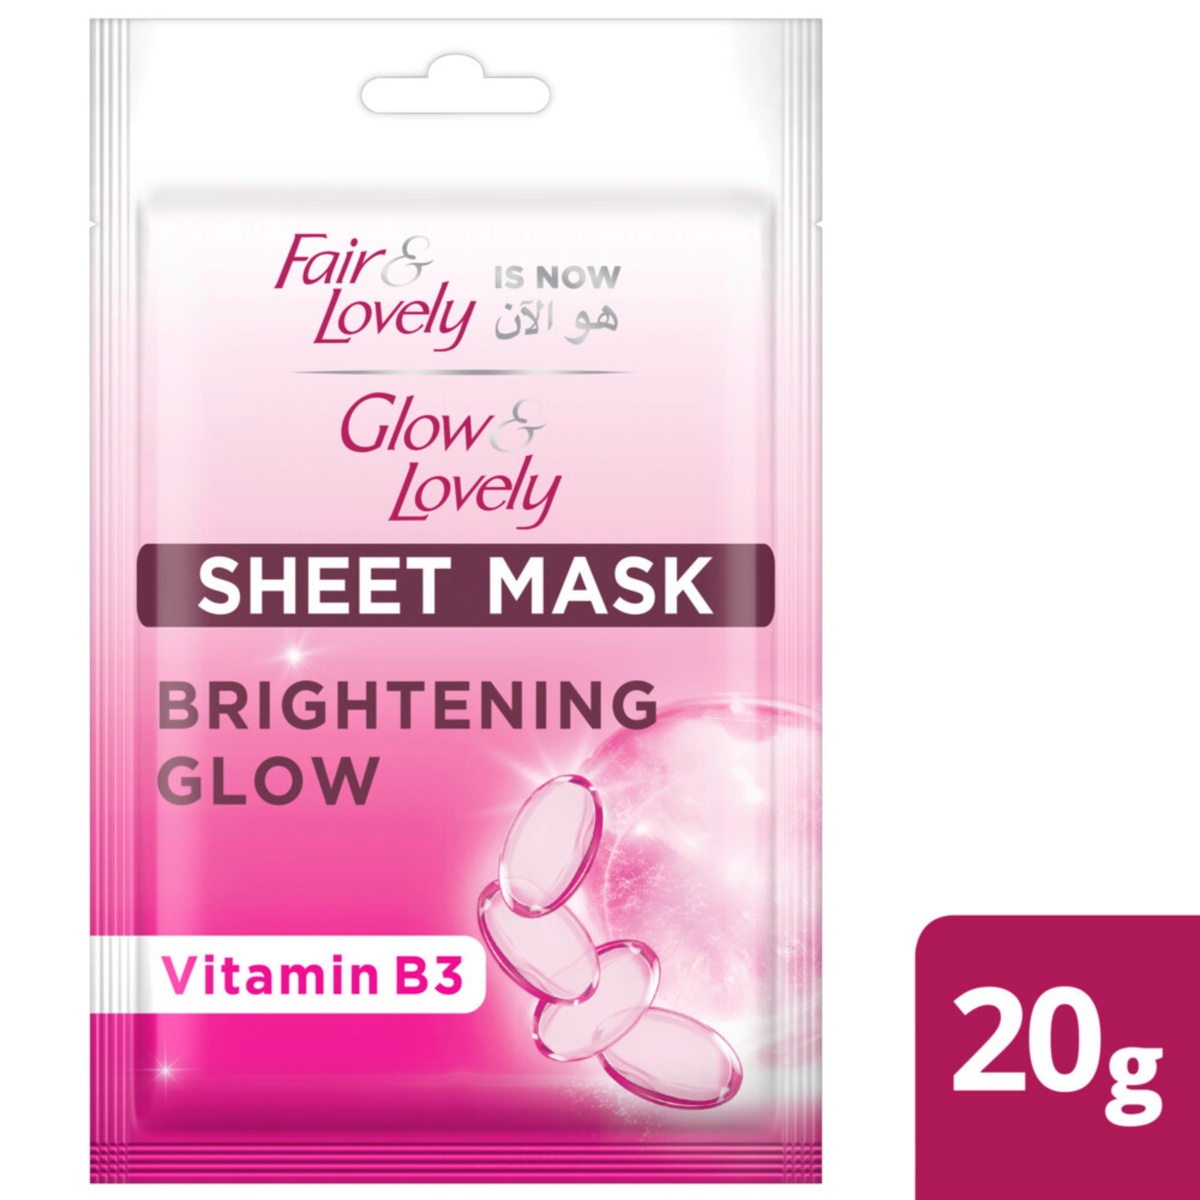 Glow & Lovely Brightening Glow Sheet Mask 20 g